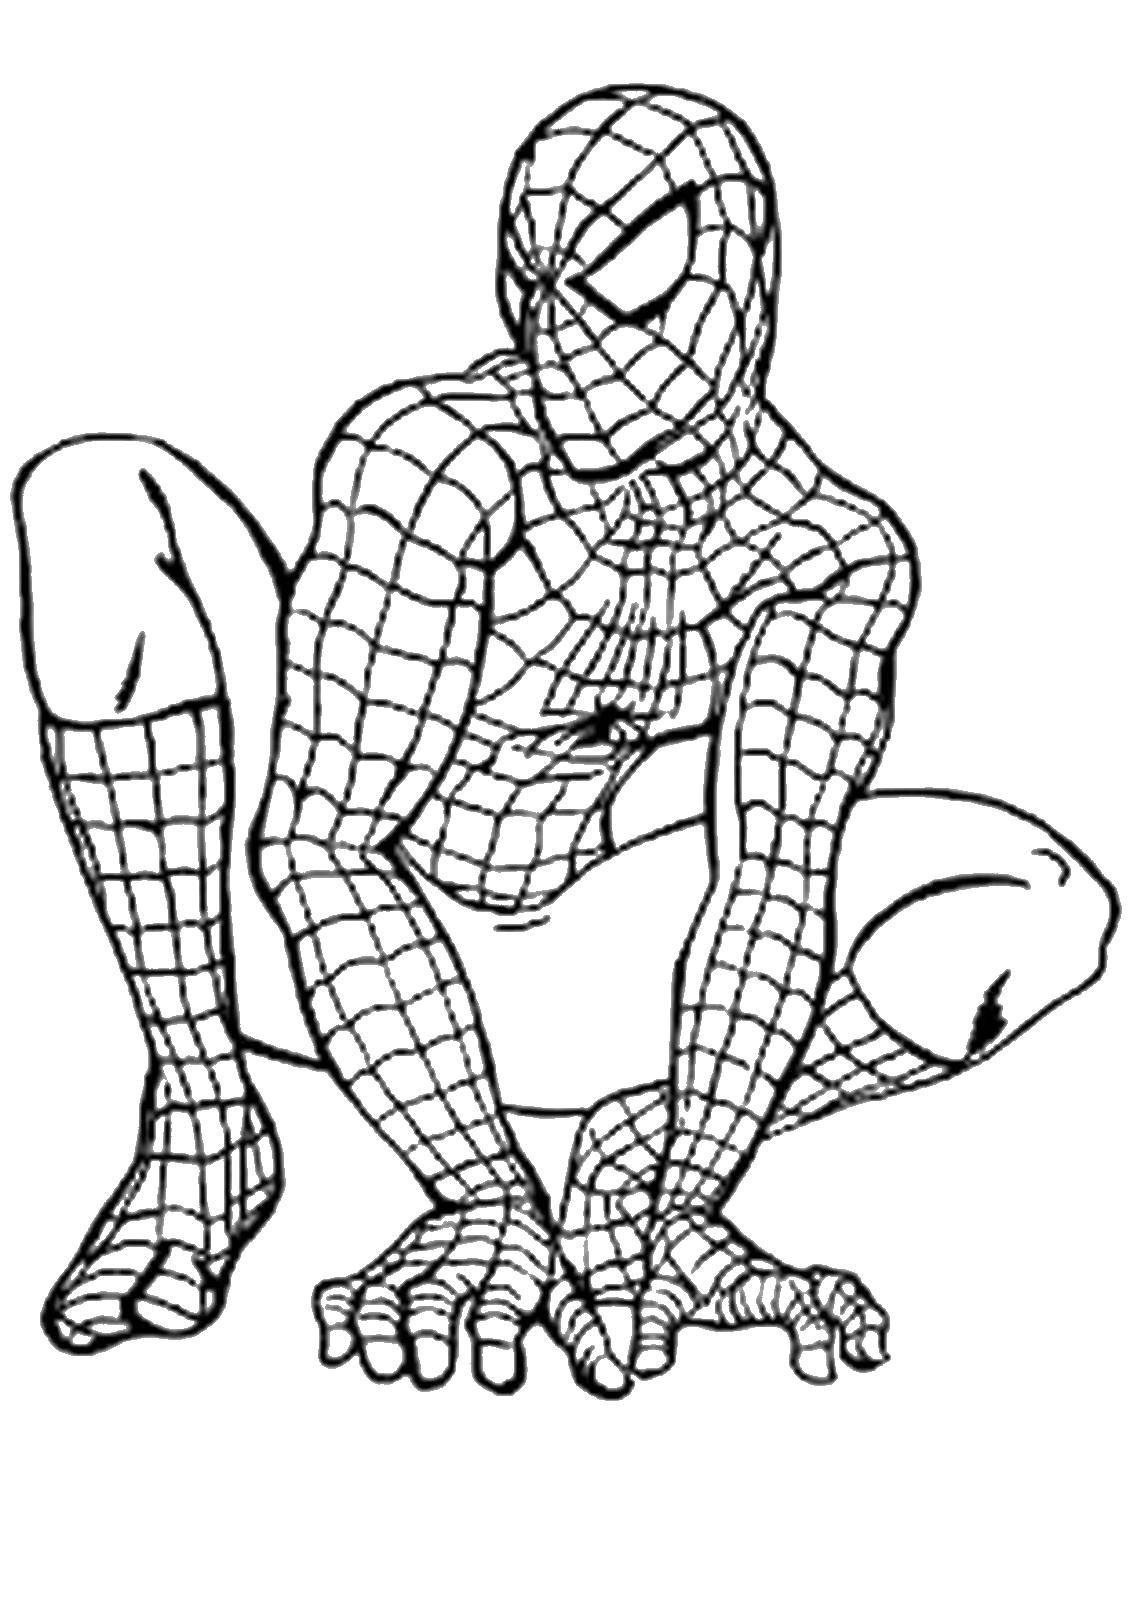 Coloring Spiderman. Category movie. Tags:  film, cartoon, Spiderman, Spiderman.